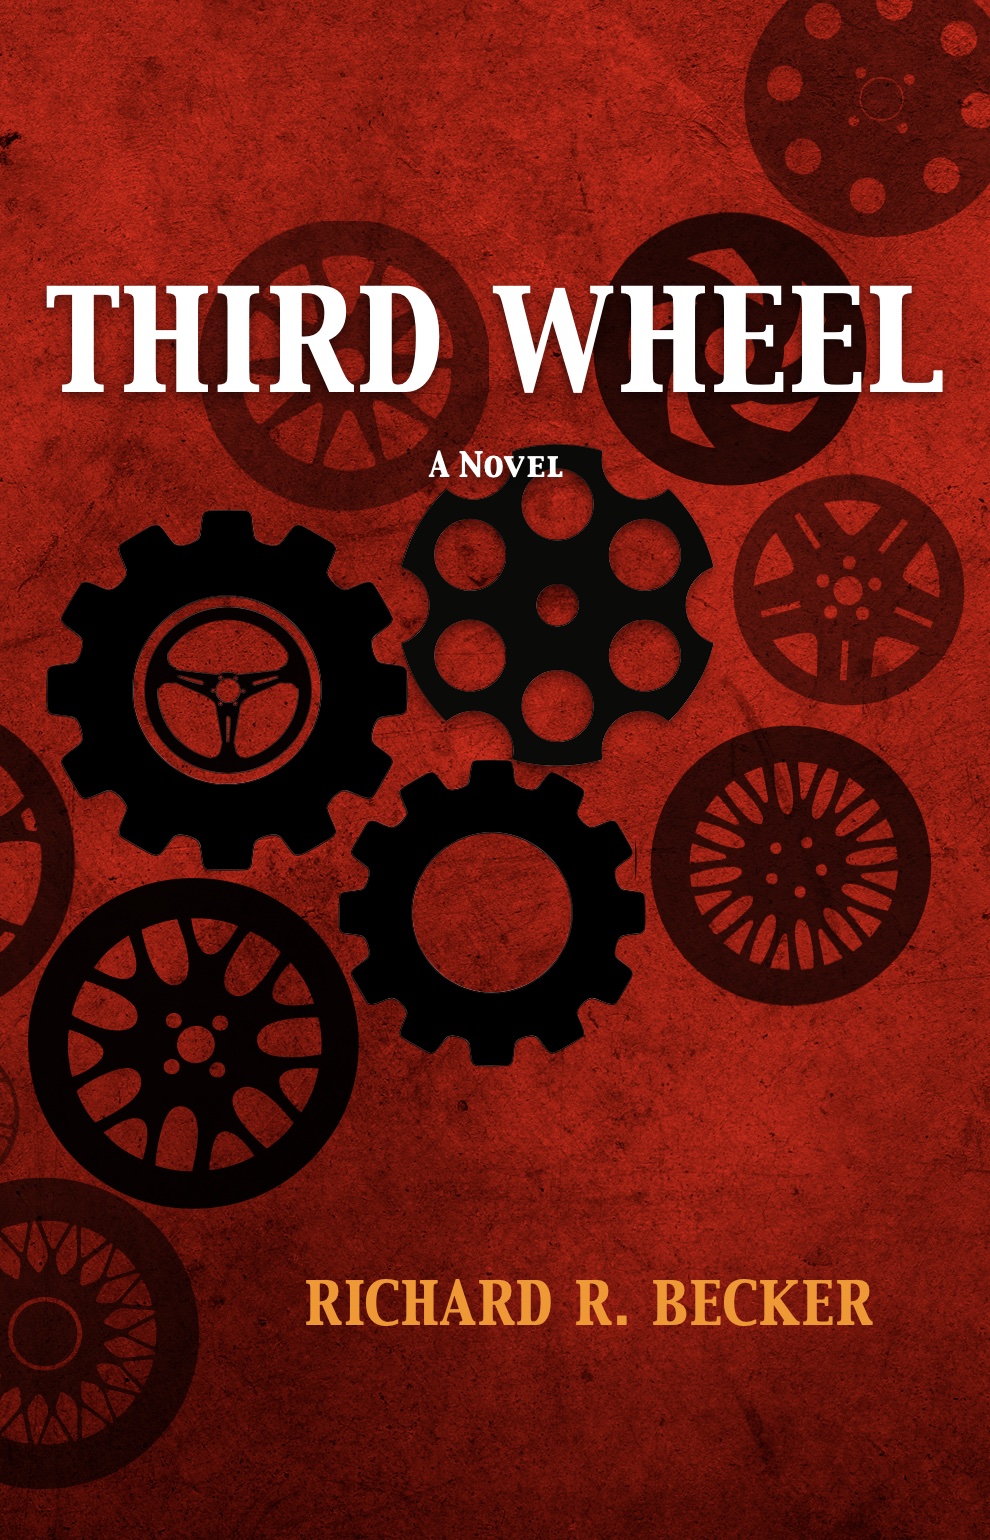 Third Wheel by Richard R. Becker